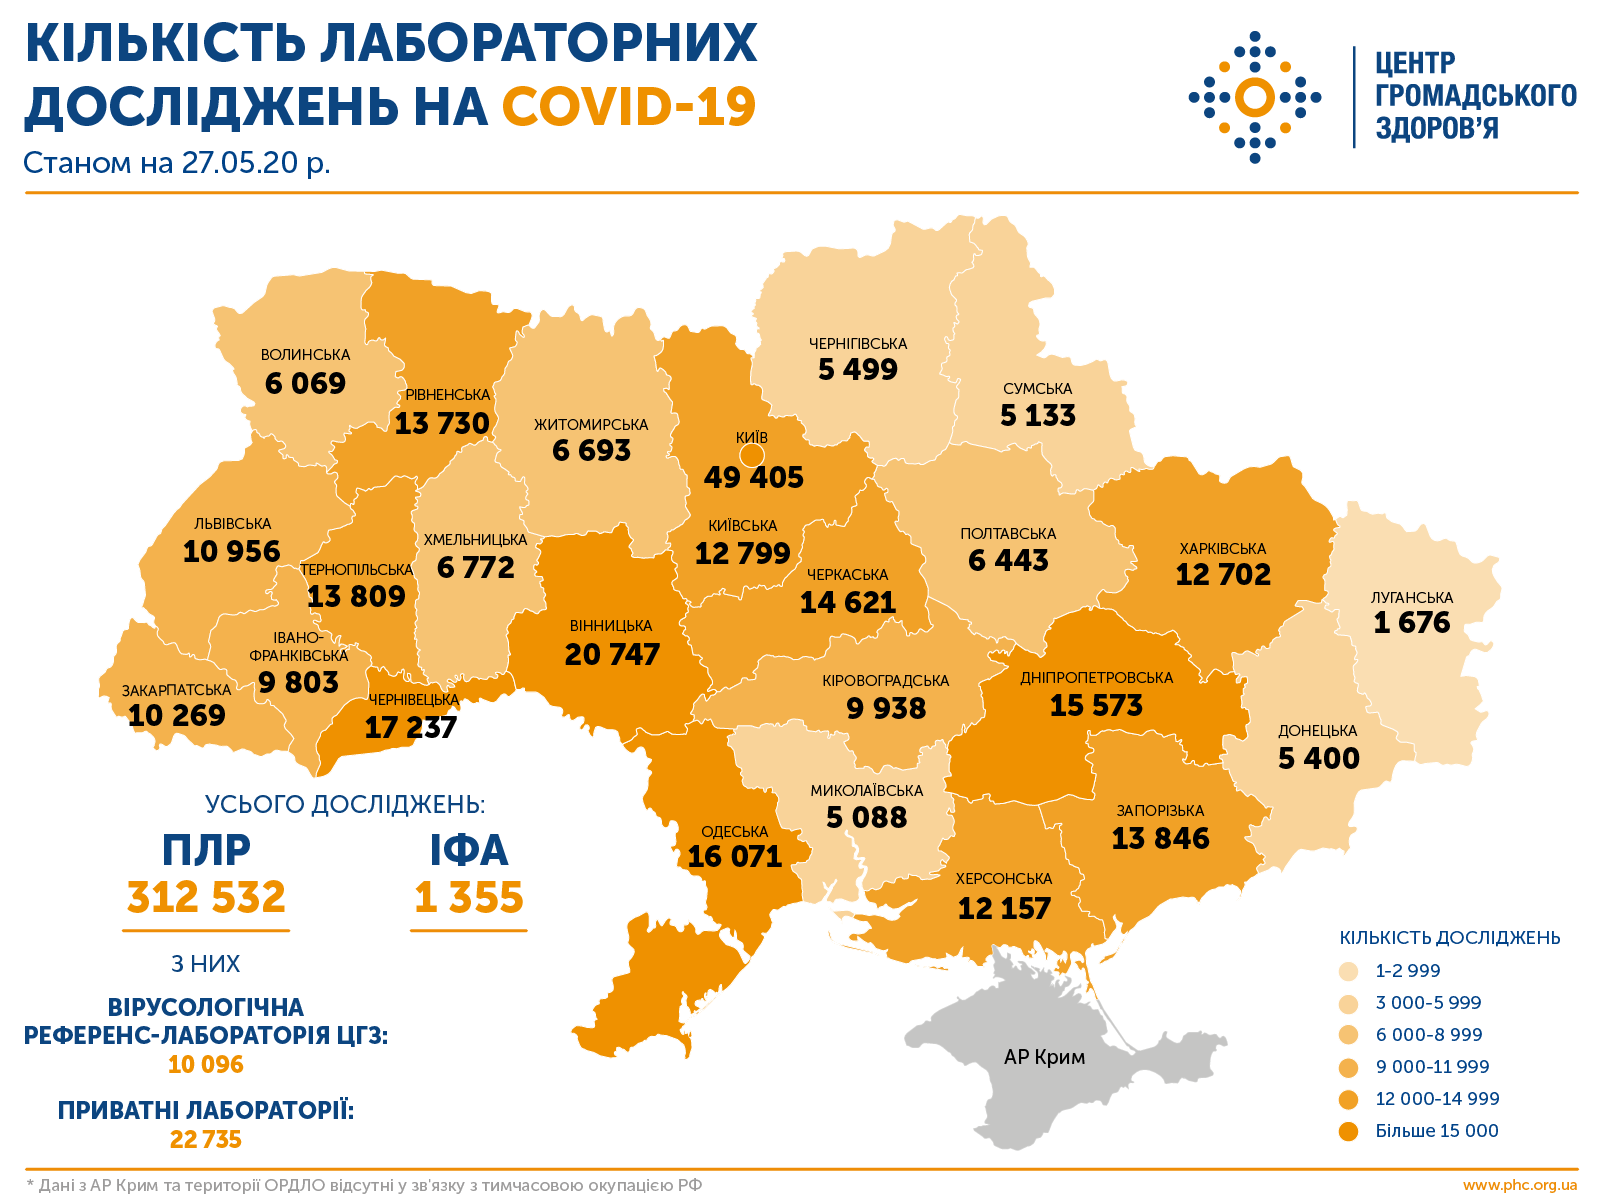 http://media.slovoidilo.ua/media/infographics/12/111714/111714-1_ru_origin.png